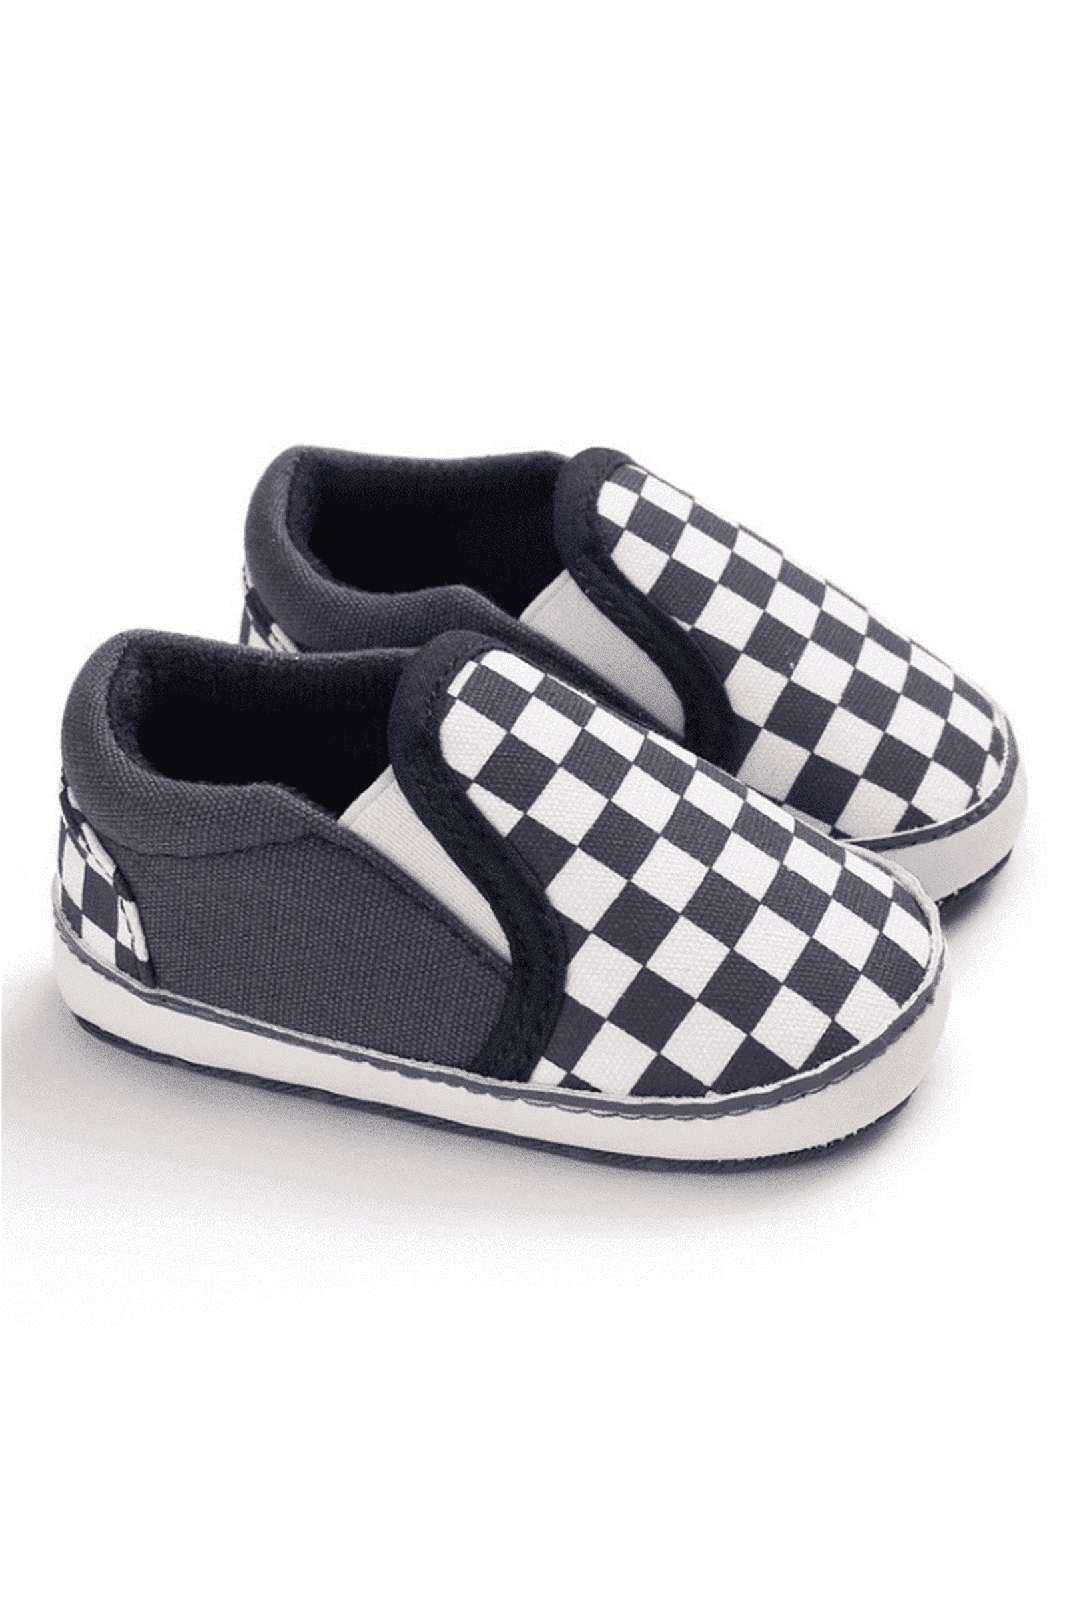 Elijah Checkered Shoes-Charcoal